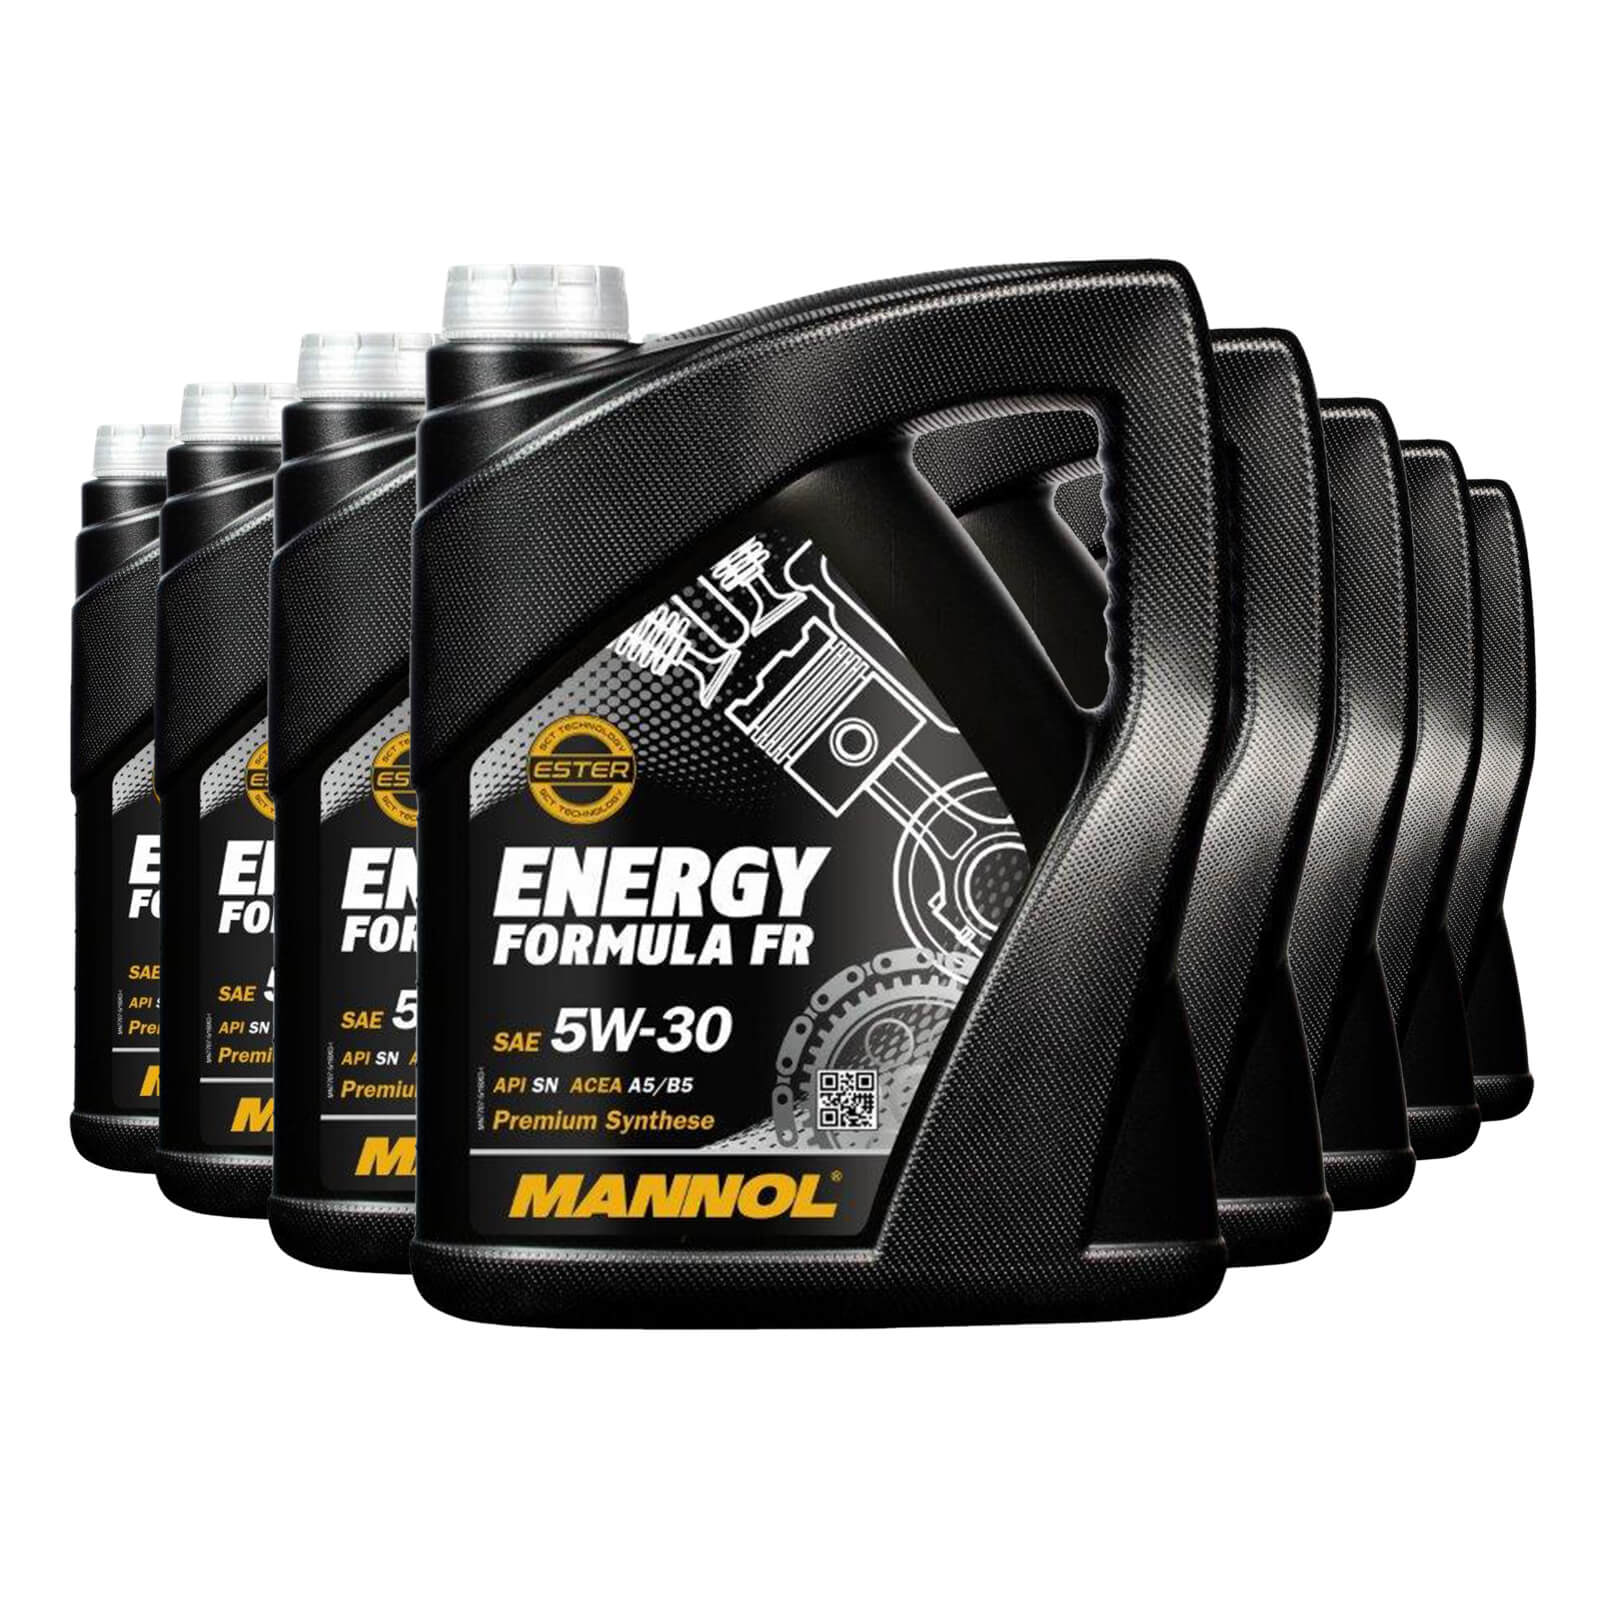 40 Liter (8x5) MANNOL Energy Formula FR 7707 5W-30 API SN ACEA A5/B5 Motoröl